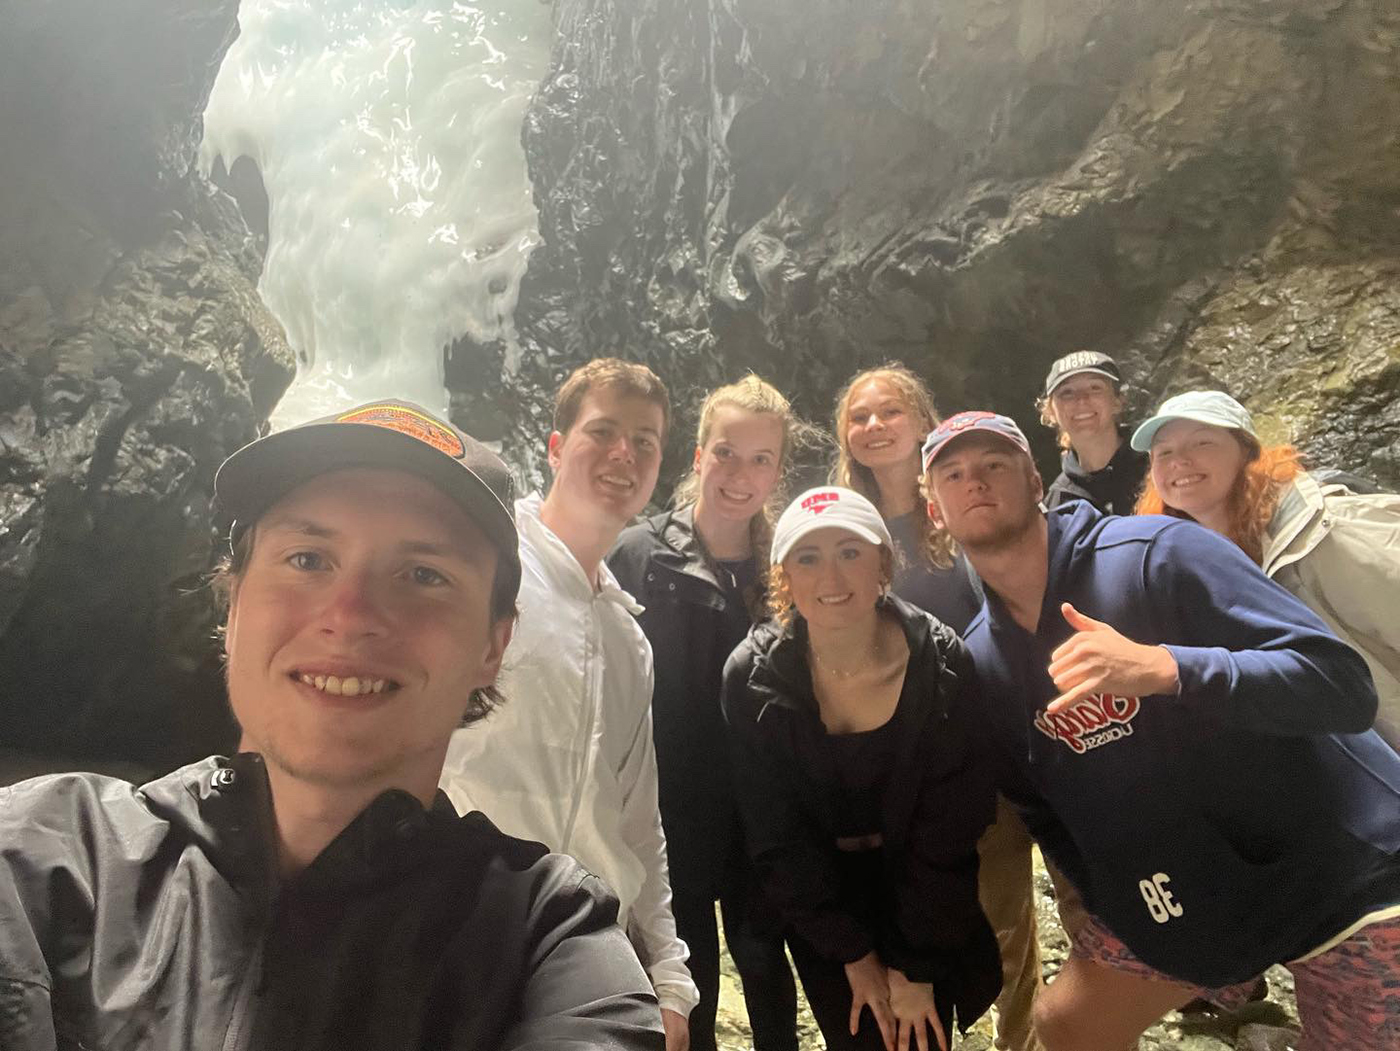 SMU-in-Taos students gather near a frozen waterfall